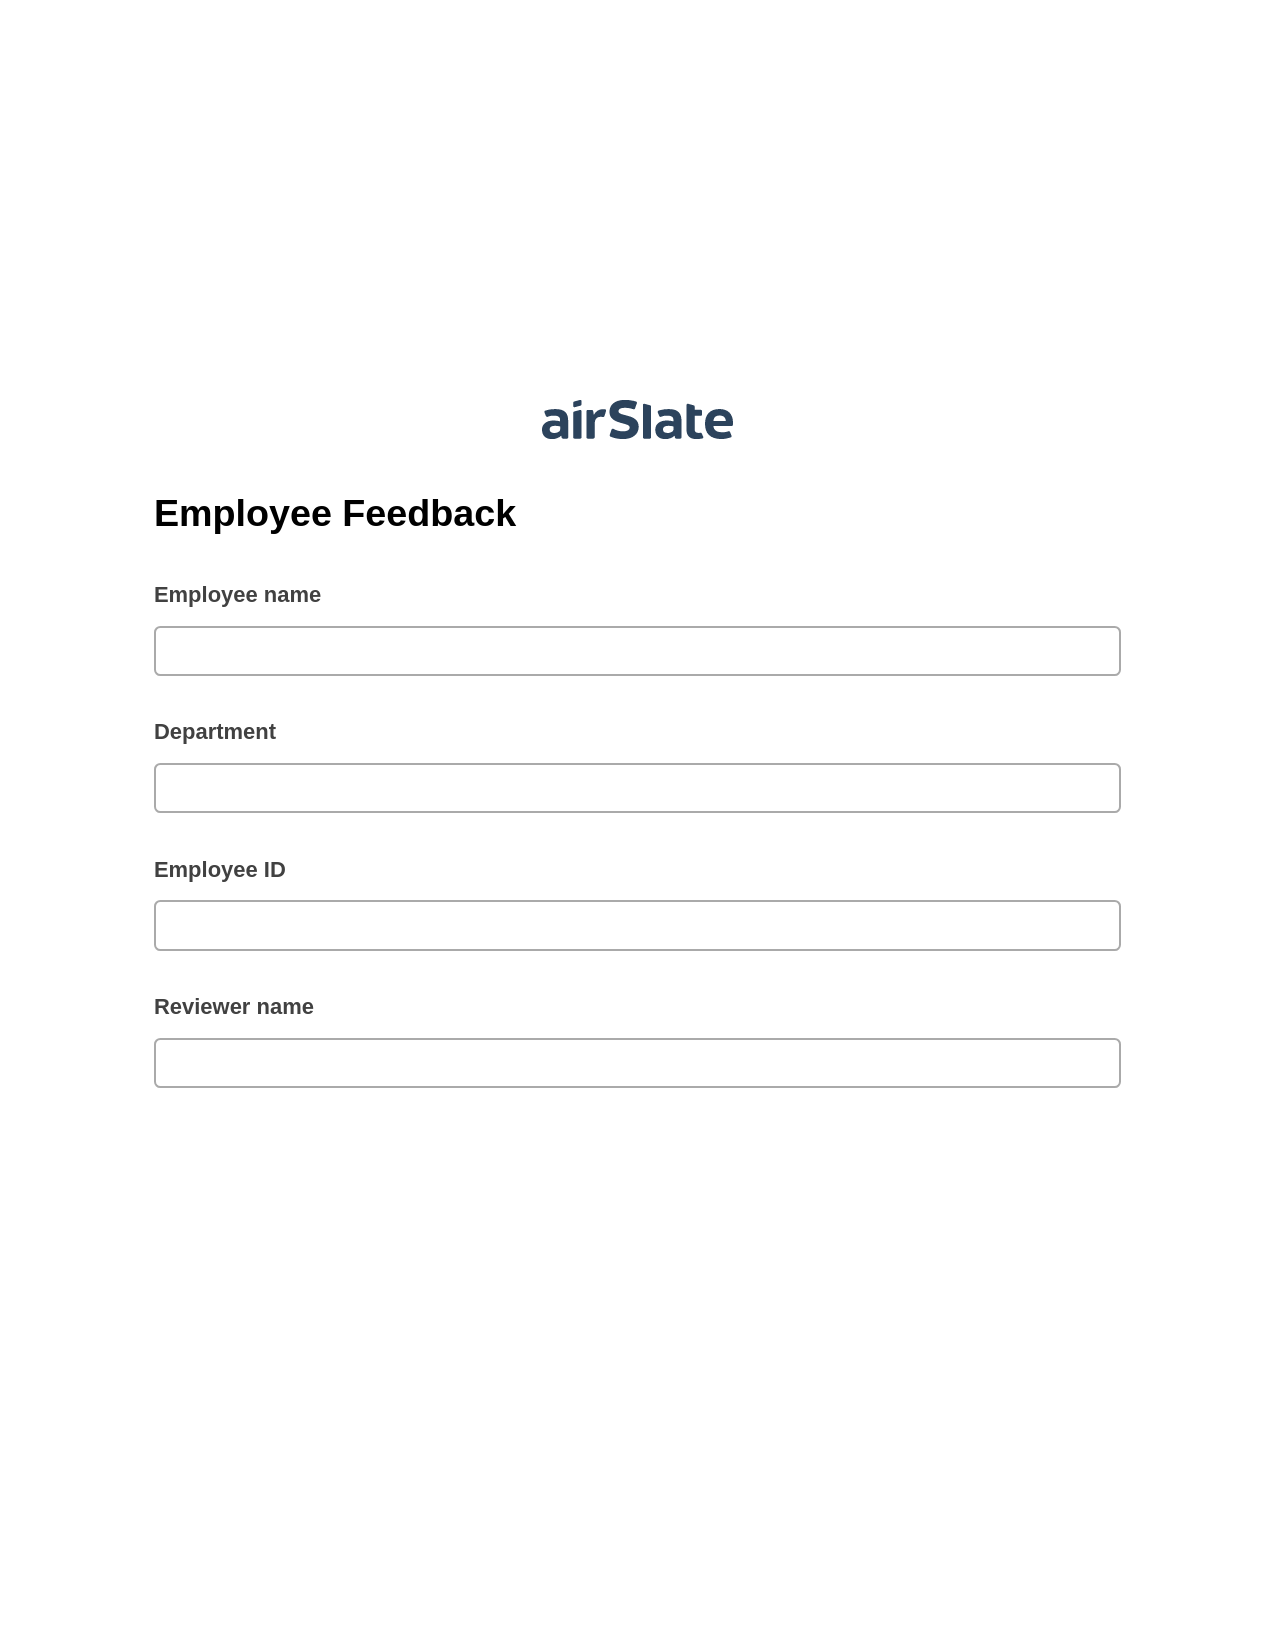 Employee Feedback Pre-fill Slate from MS Dynamics 365 Records Bot, Audit Trail Bot, Box Bot